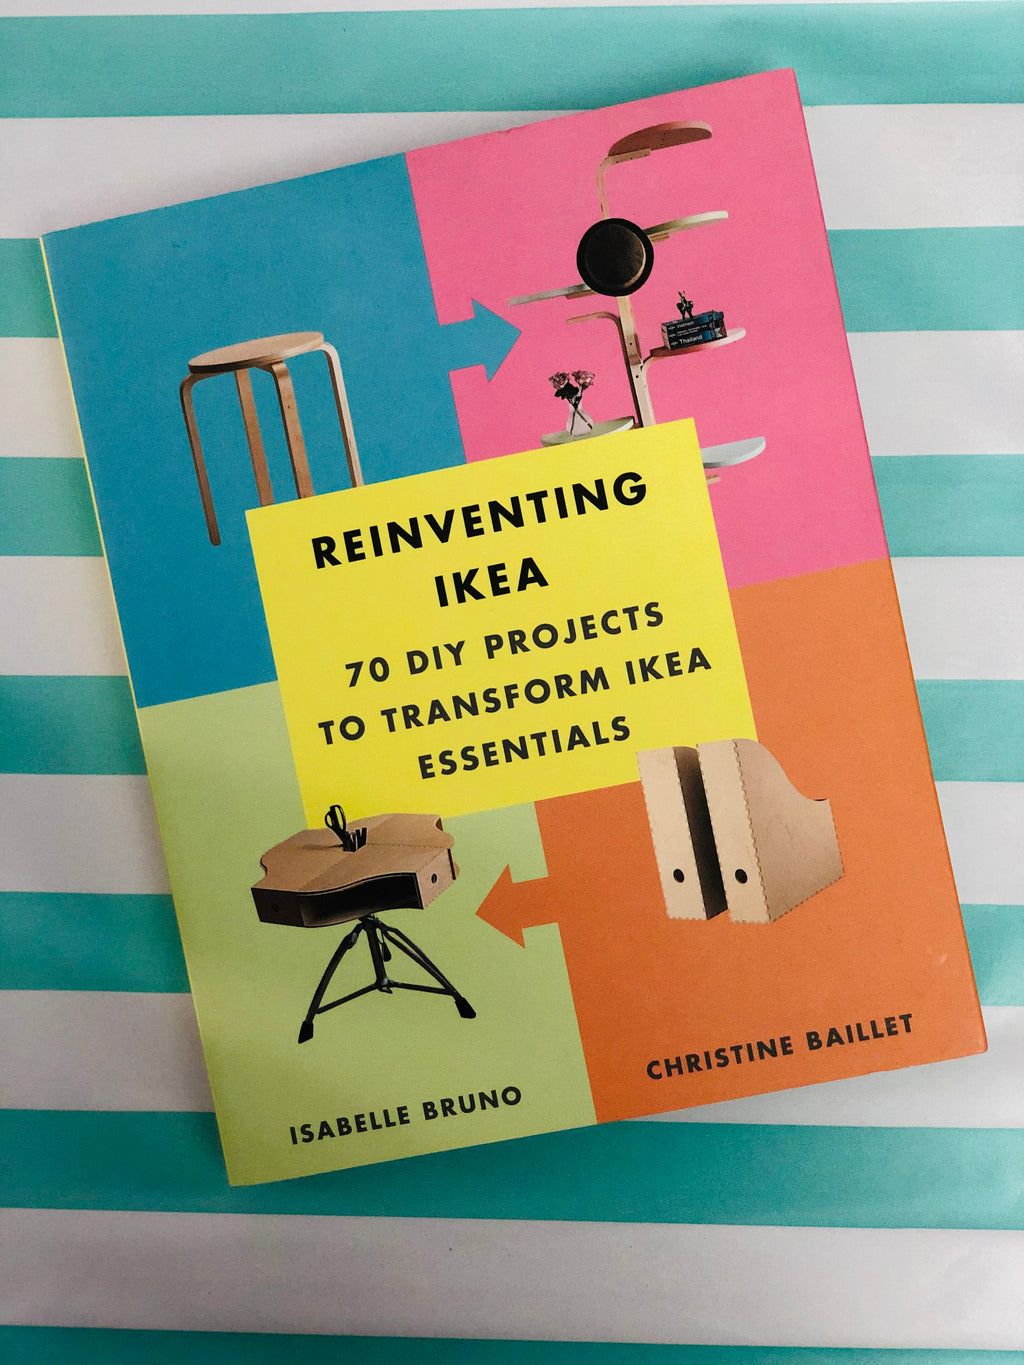 Reinventing Ikea- By Isabella Bruno & Christine Baillet